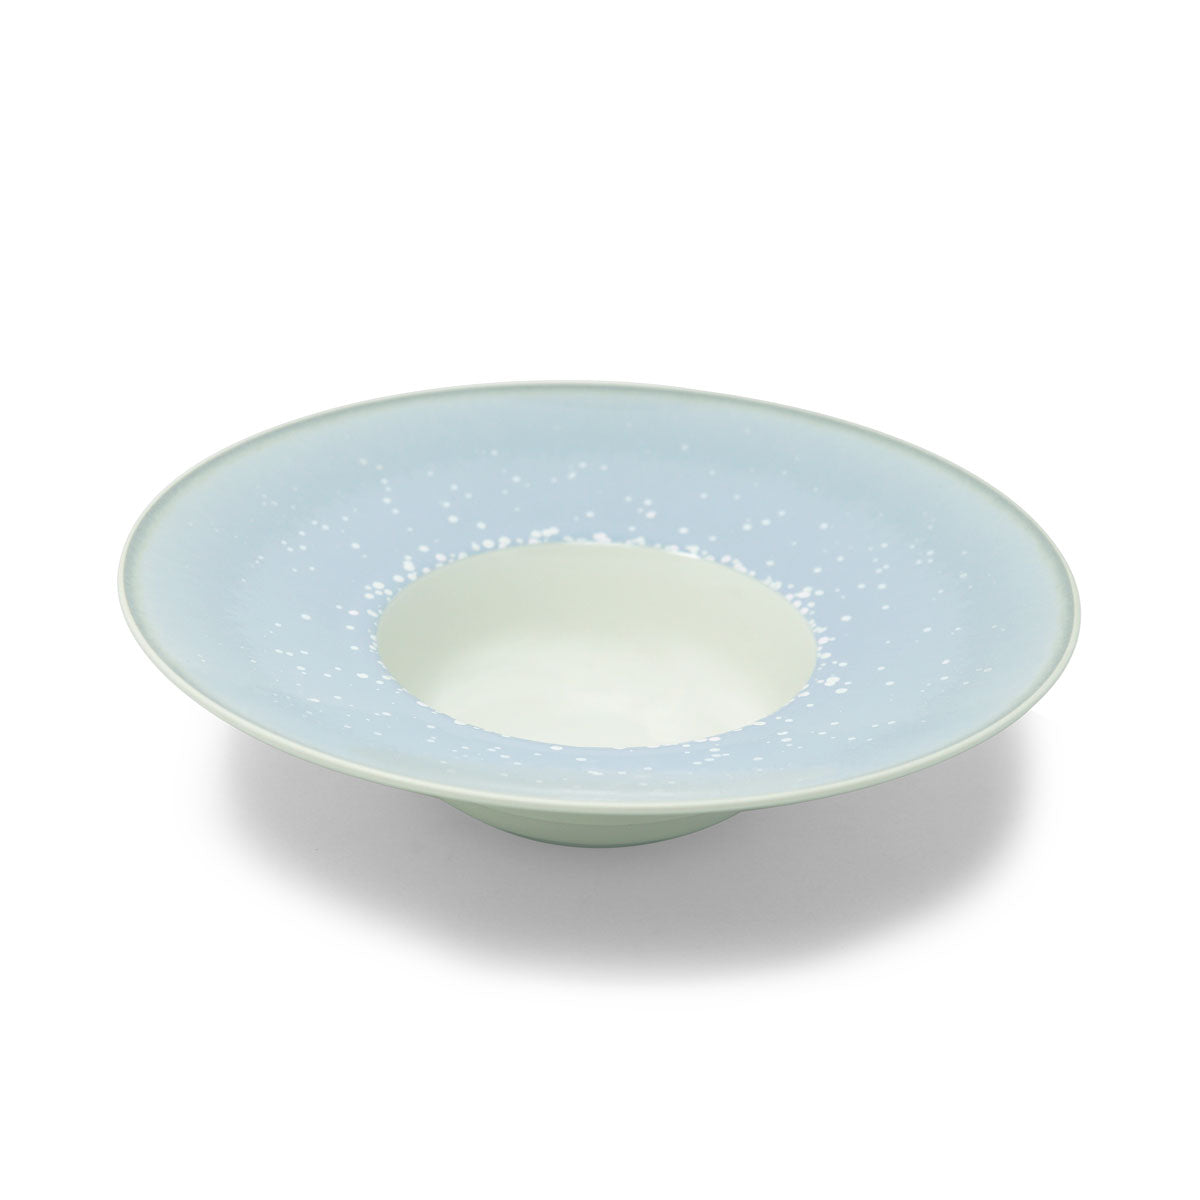 SONG Ocean - Rim soup plate, large